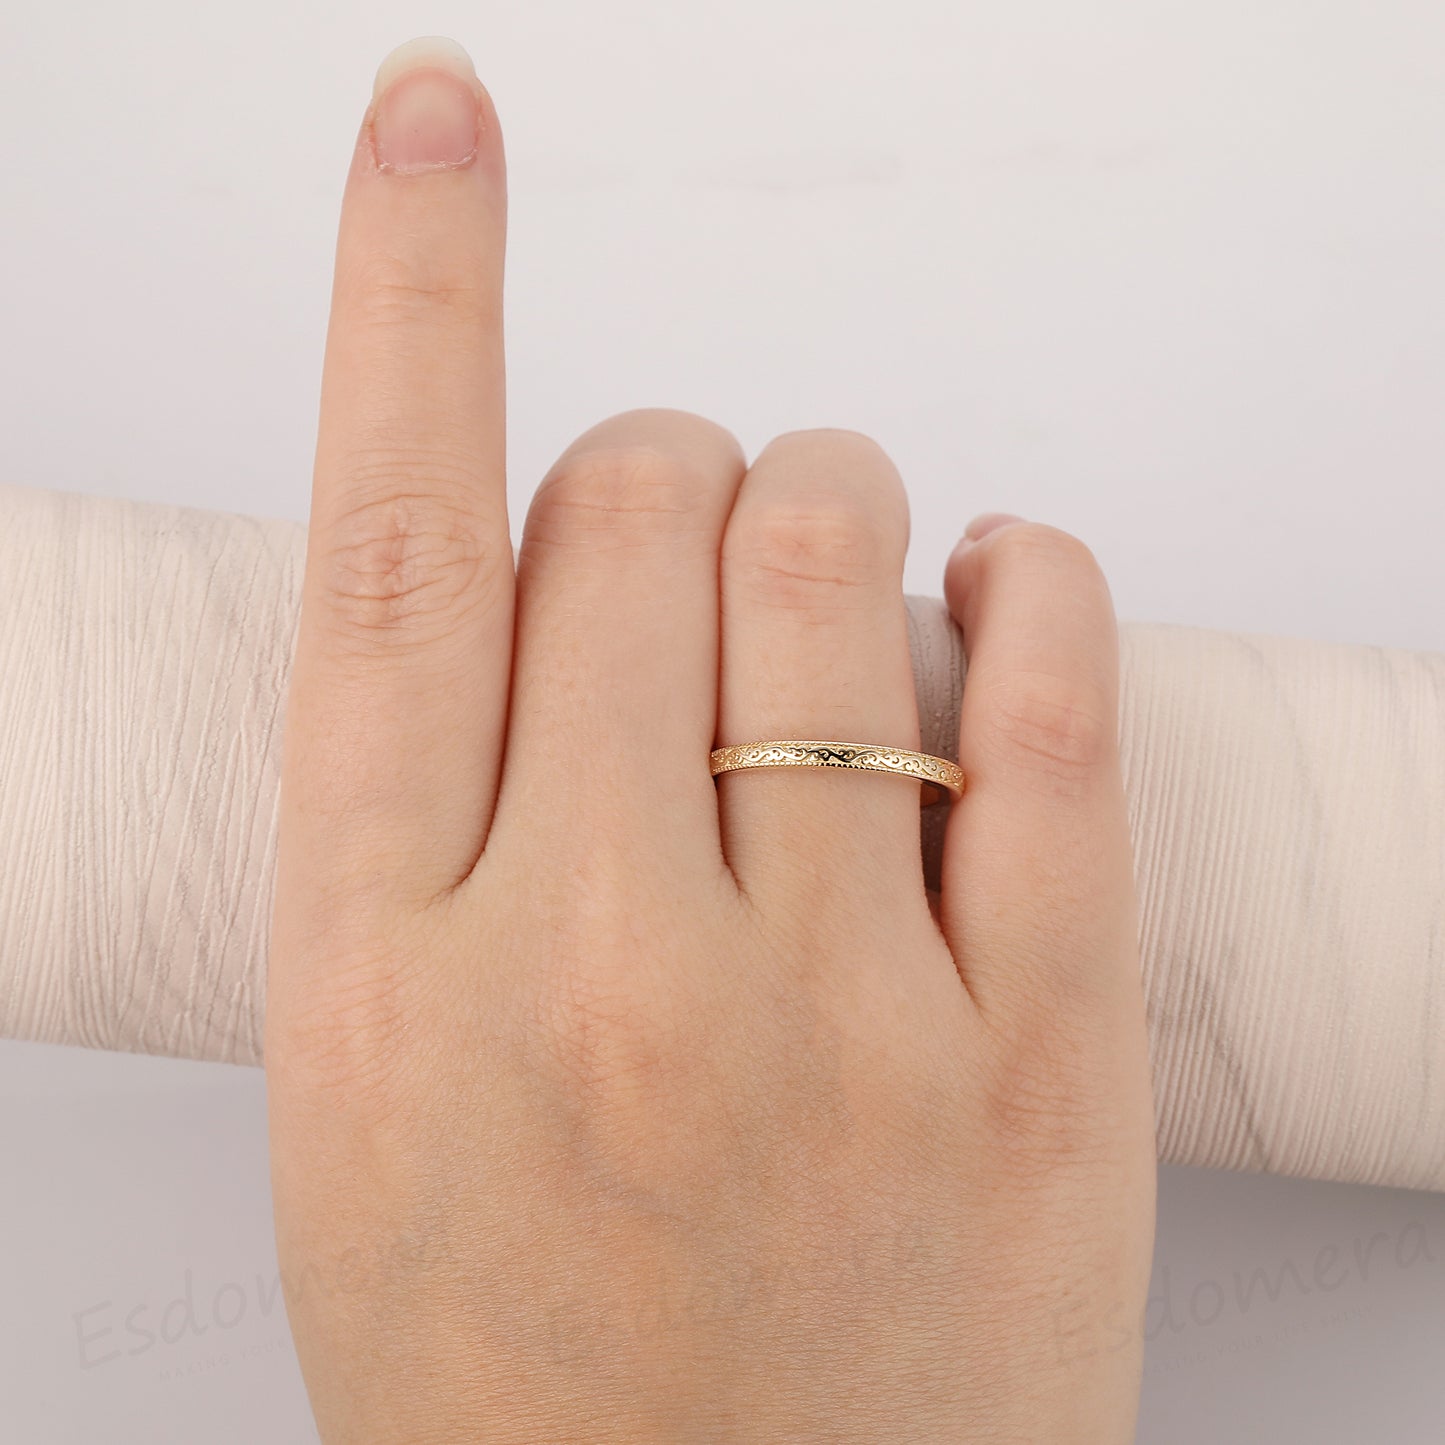 Solid 14k Yellow Gold Wedding Band, Matching Ring, Handmade Jewelry